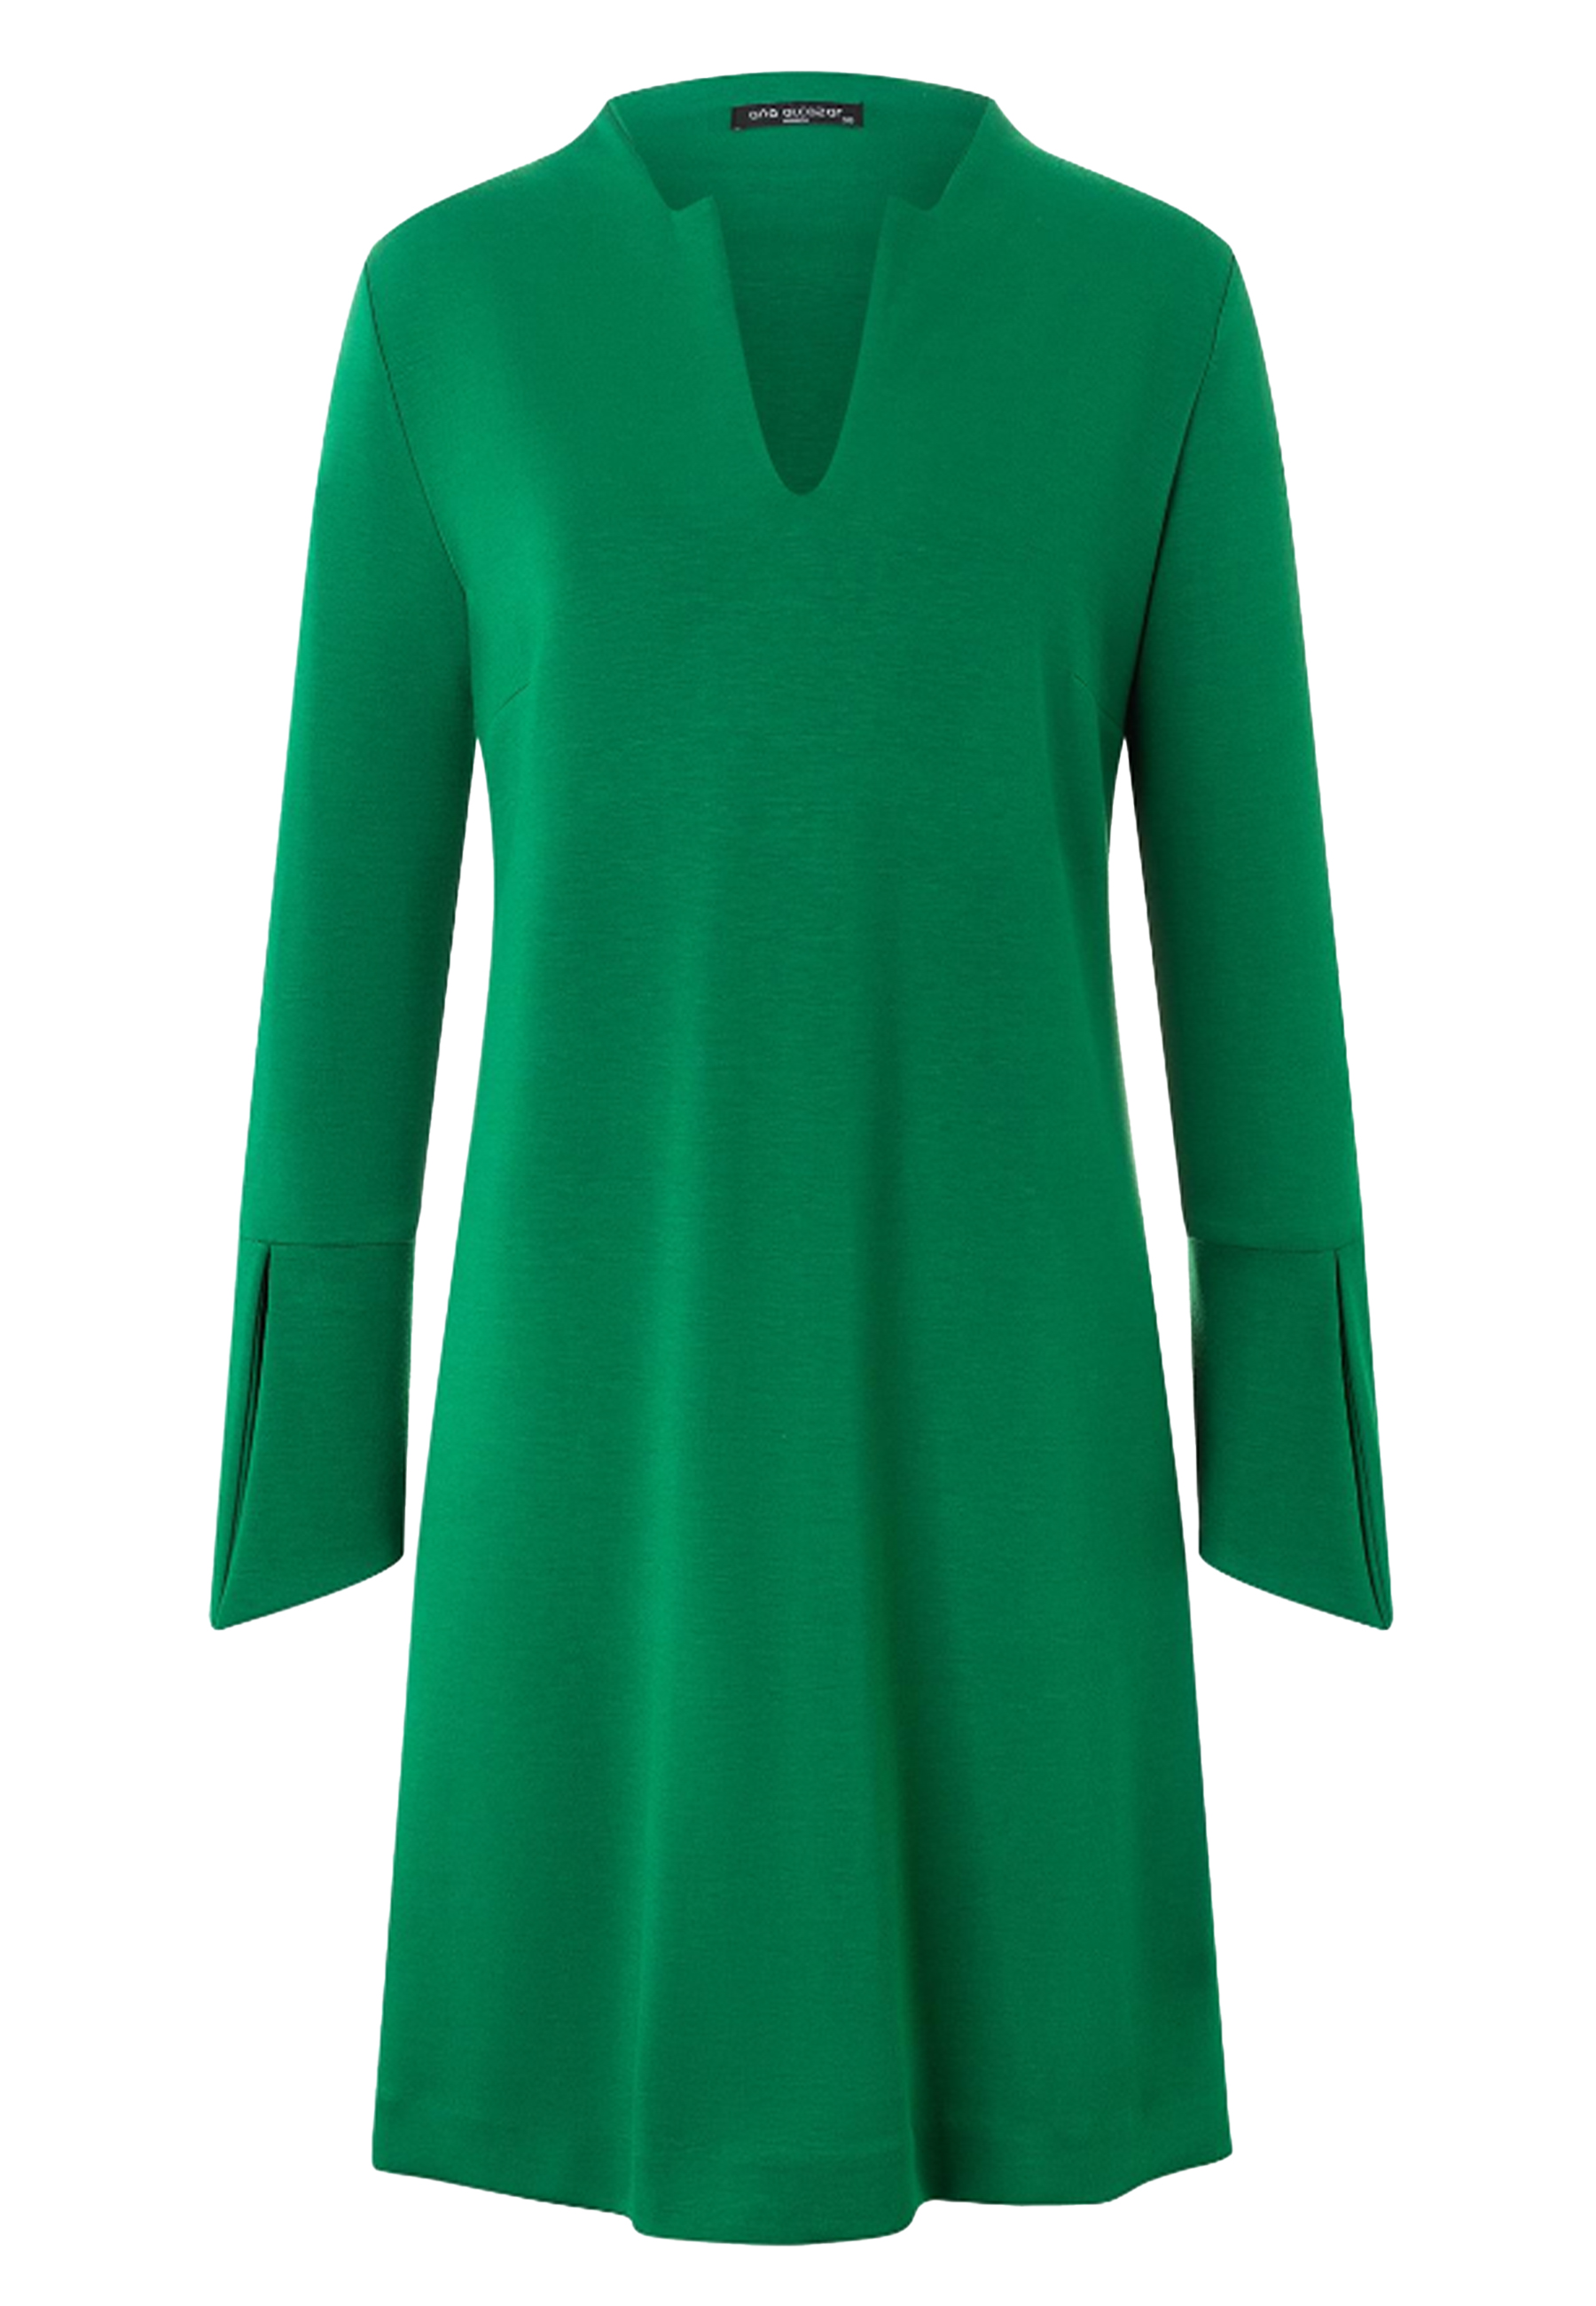 Ana Alcazar jurken groen Dames maat 40